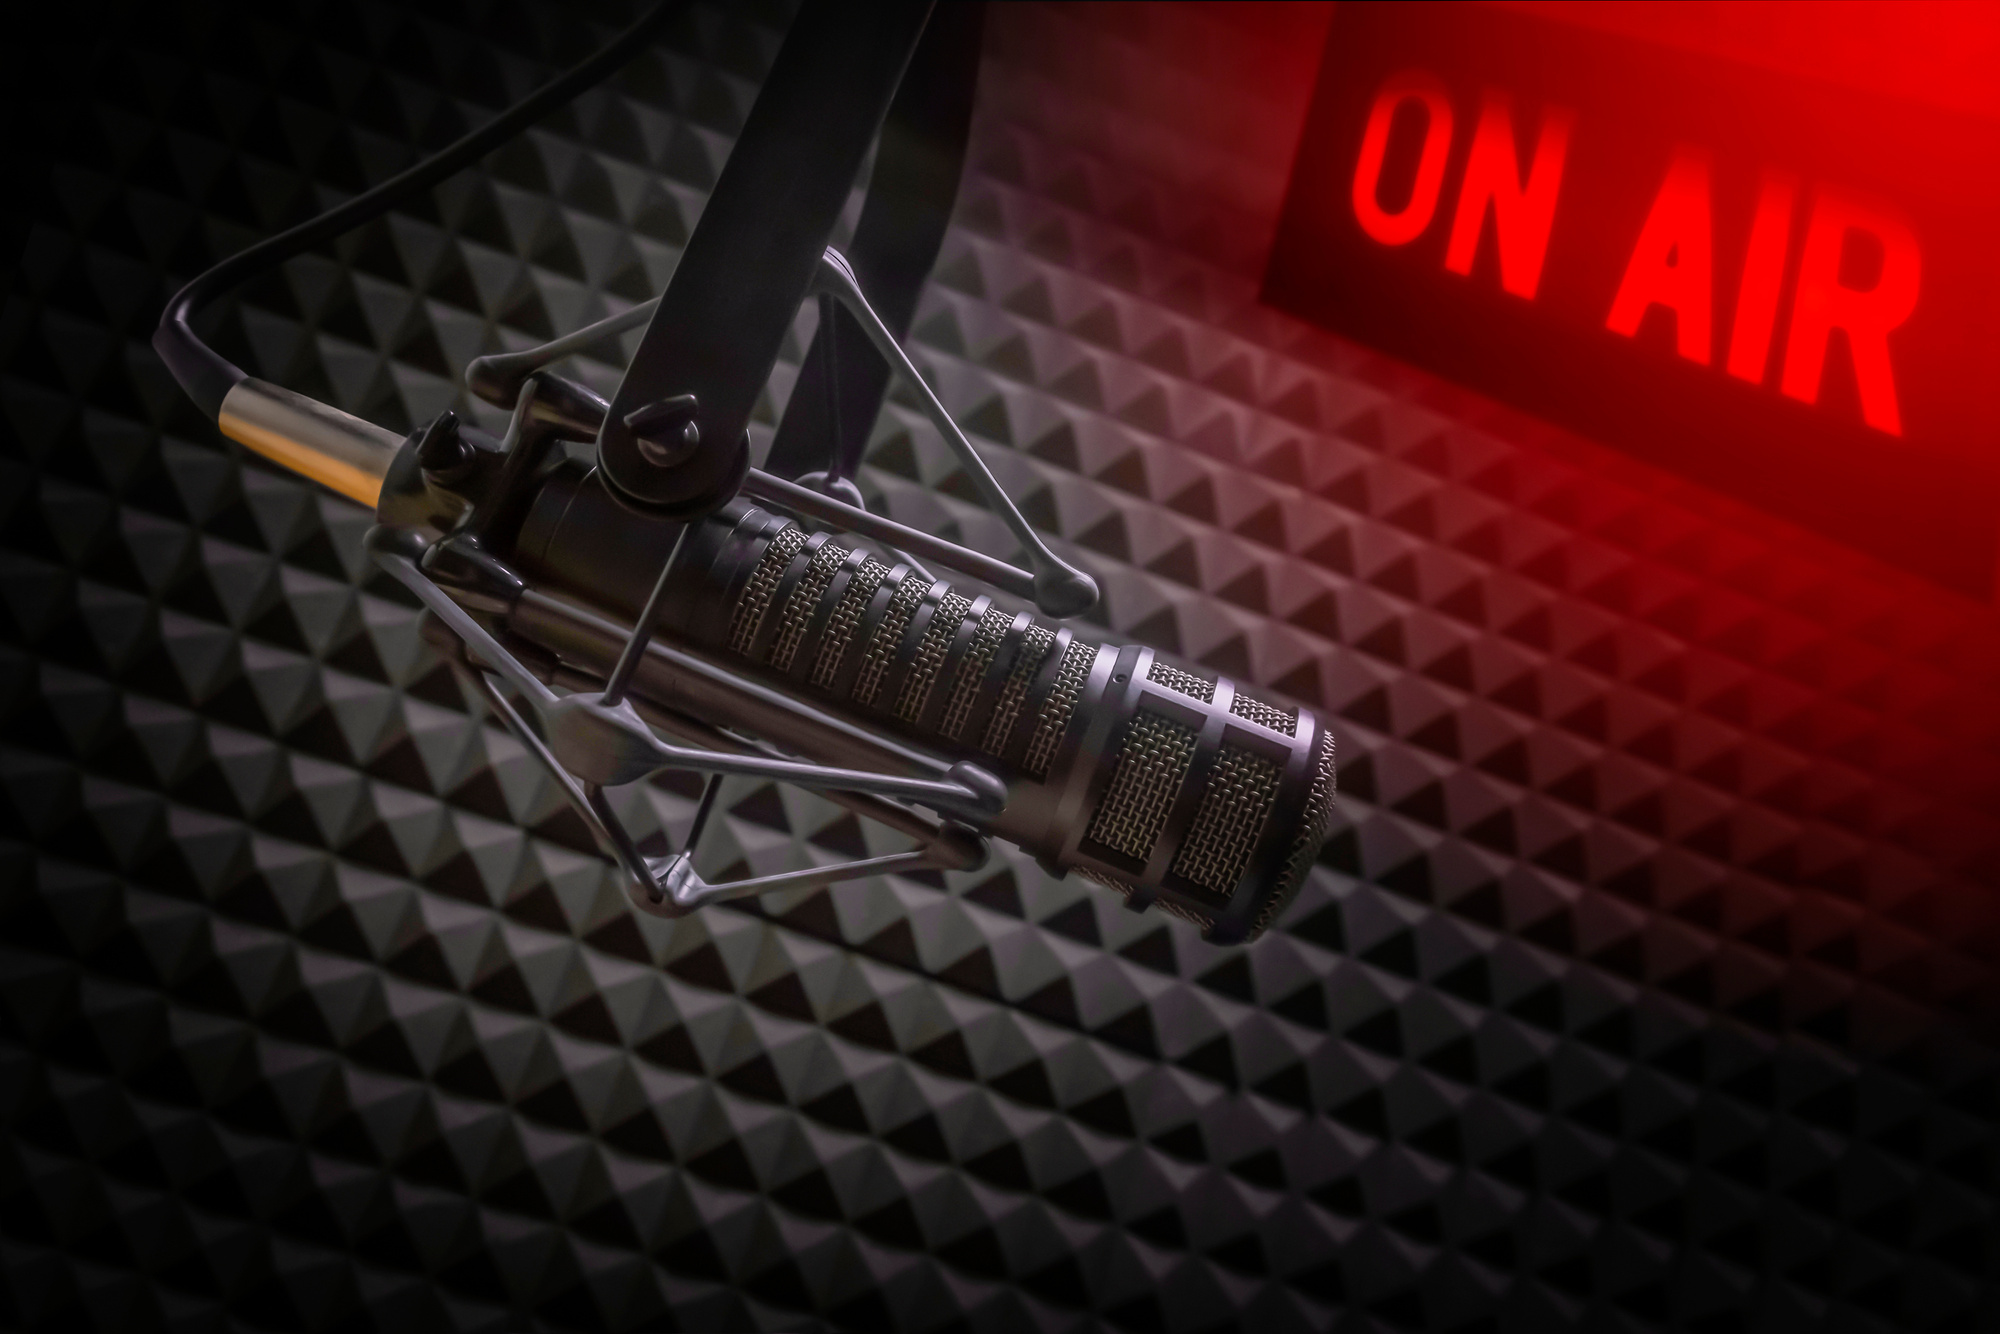 Professional microphone in radio station studio